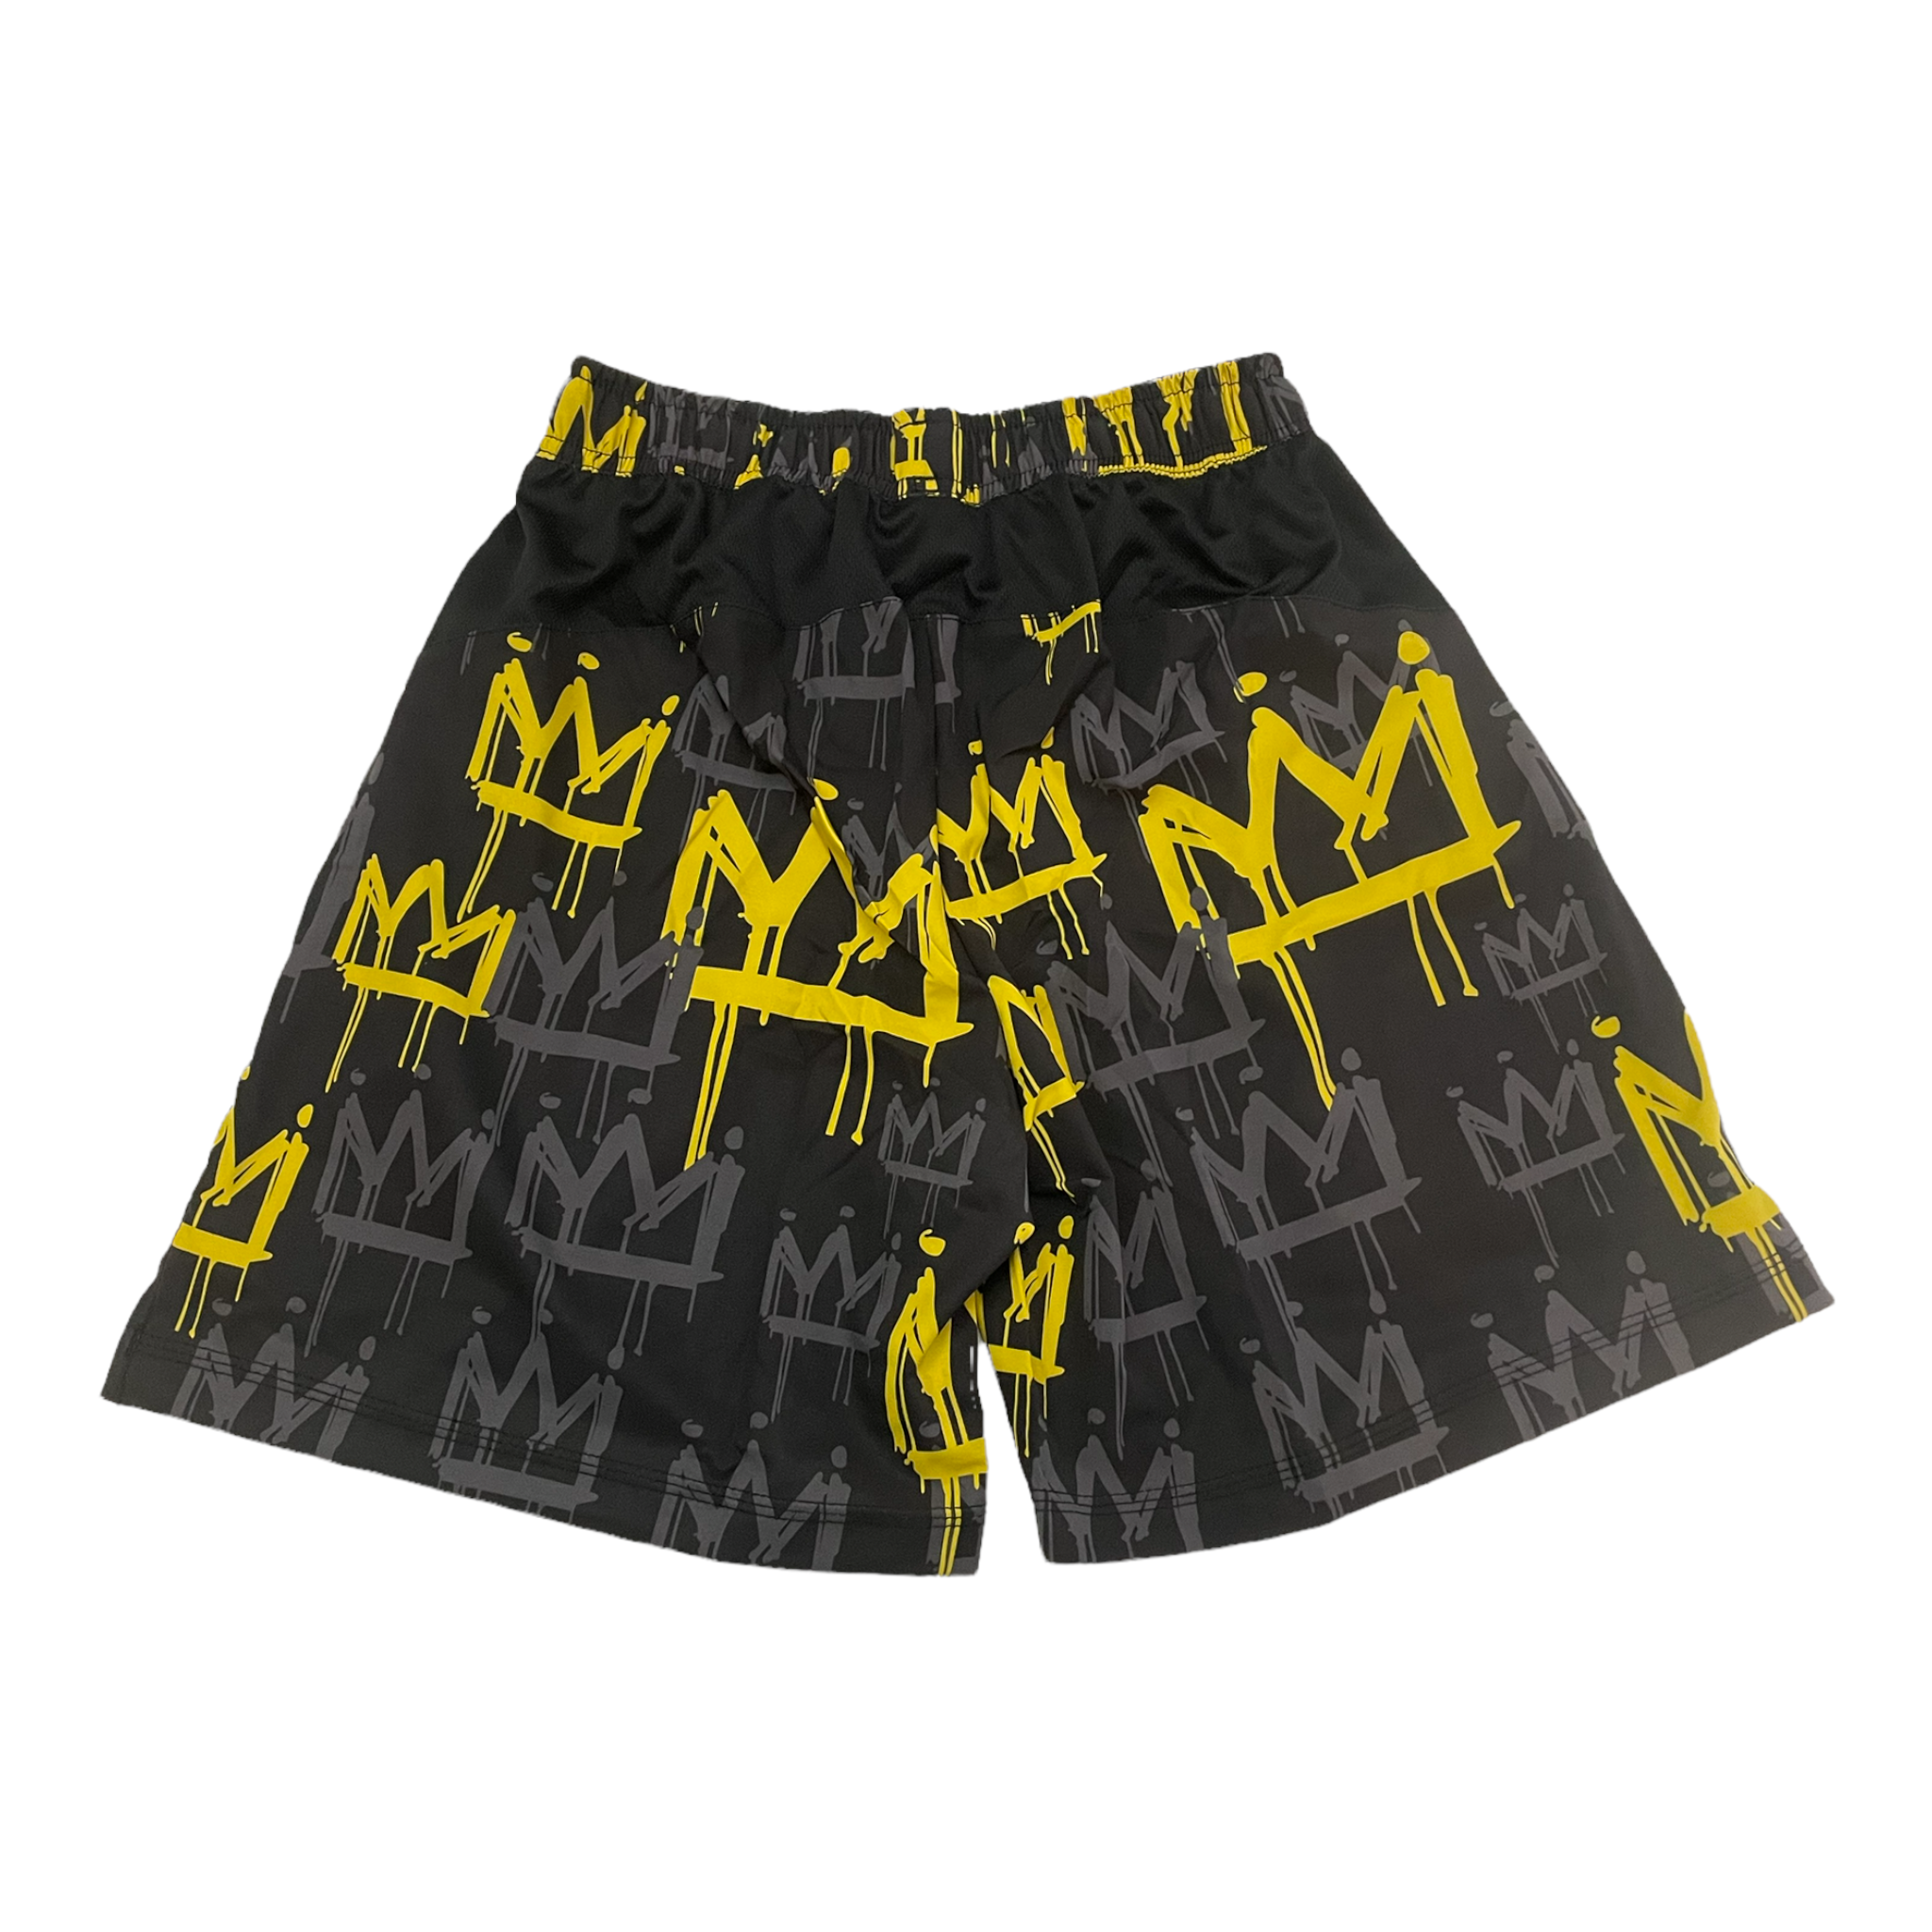 MVM “CROWN” Gym Shorts